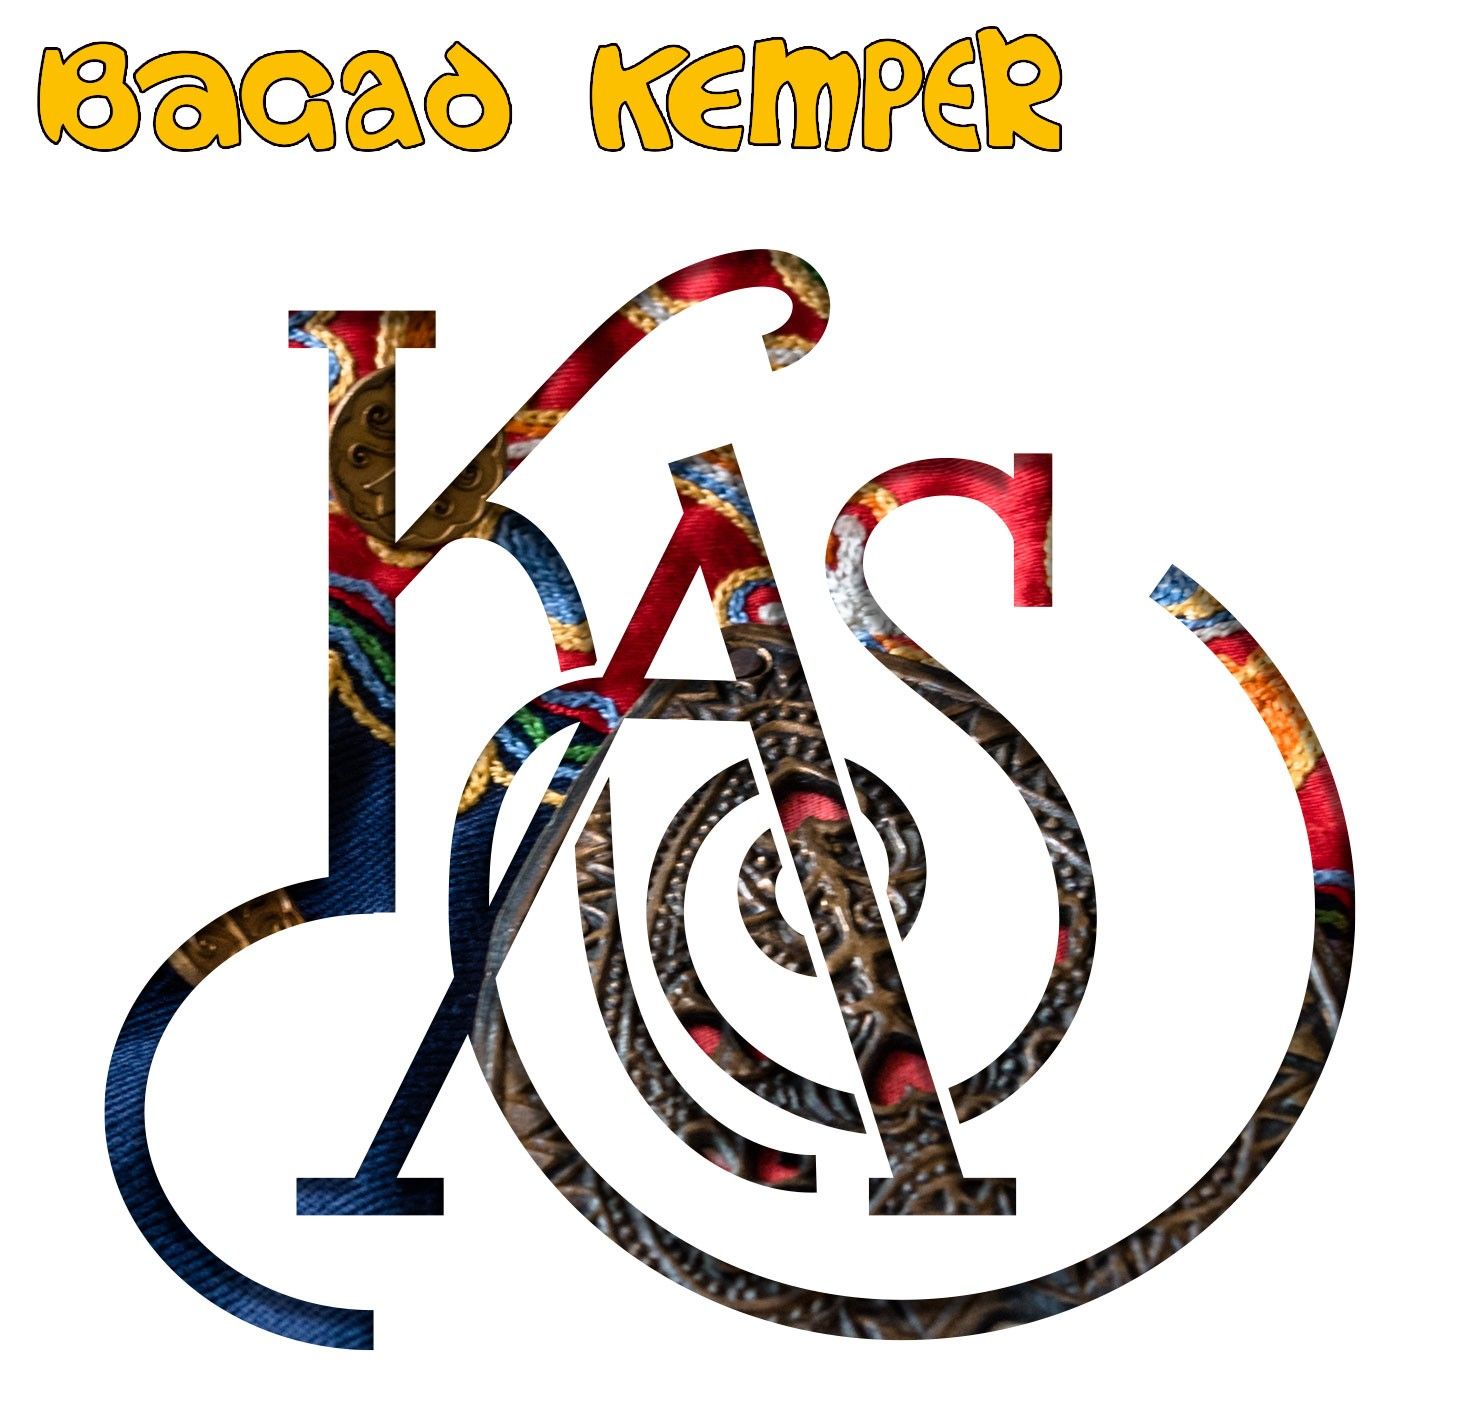 BAGAD KEMPER - Kas